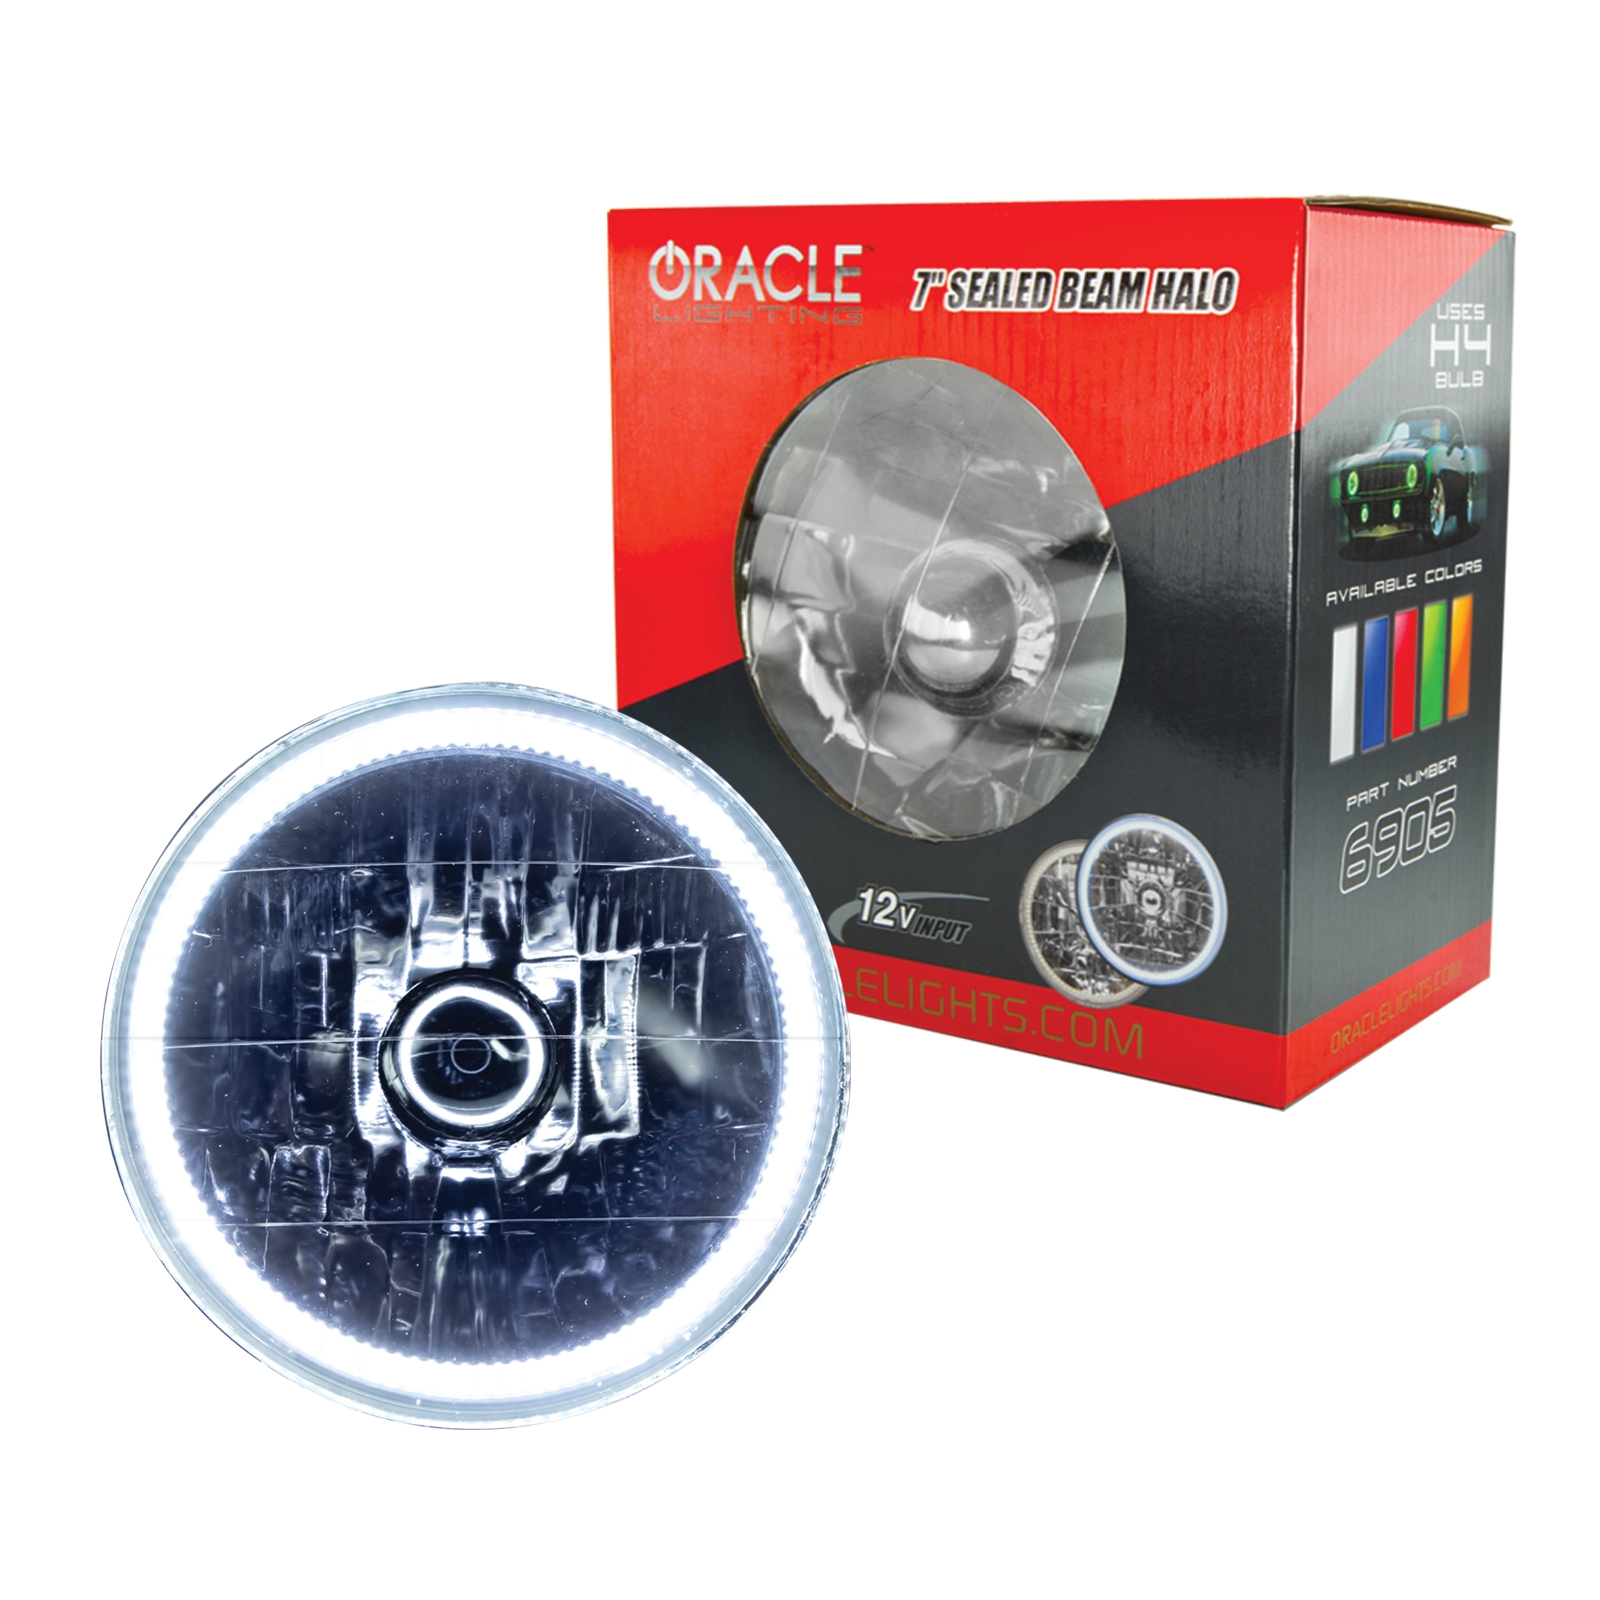 Oracle Halo H4 Conversion Headlight 7, White, FQCV-6905-001